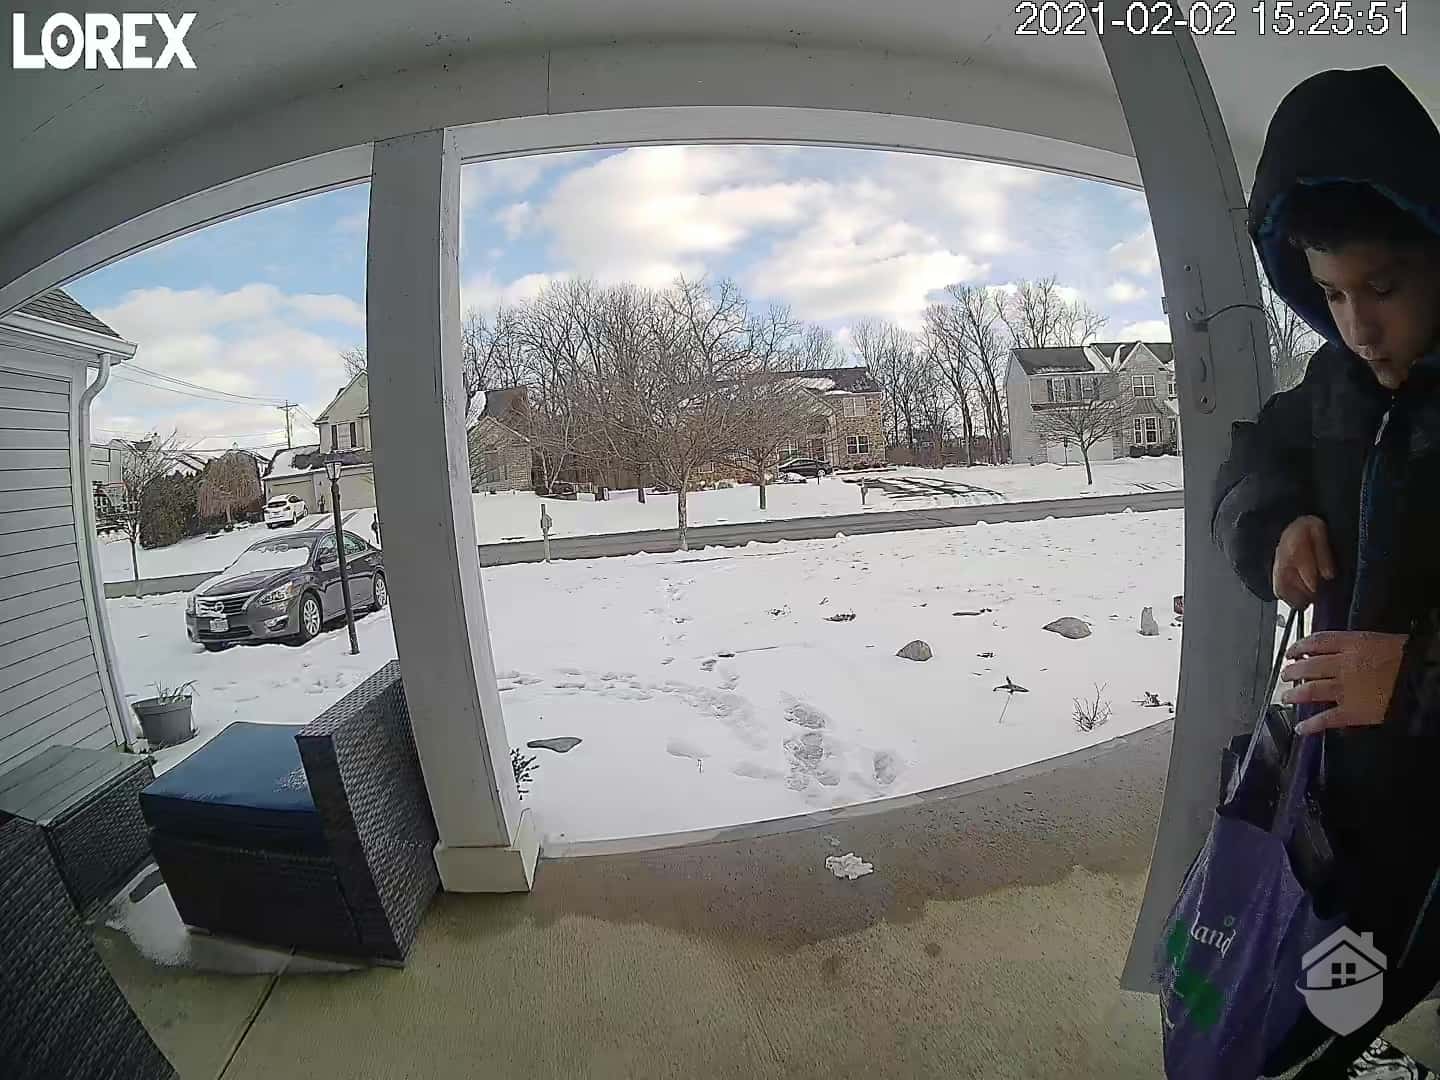 View from the Lorex Doorbell Camera